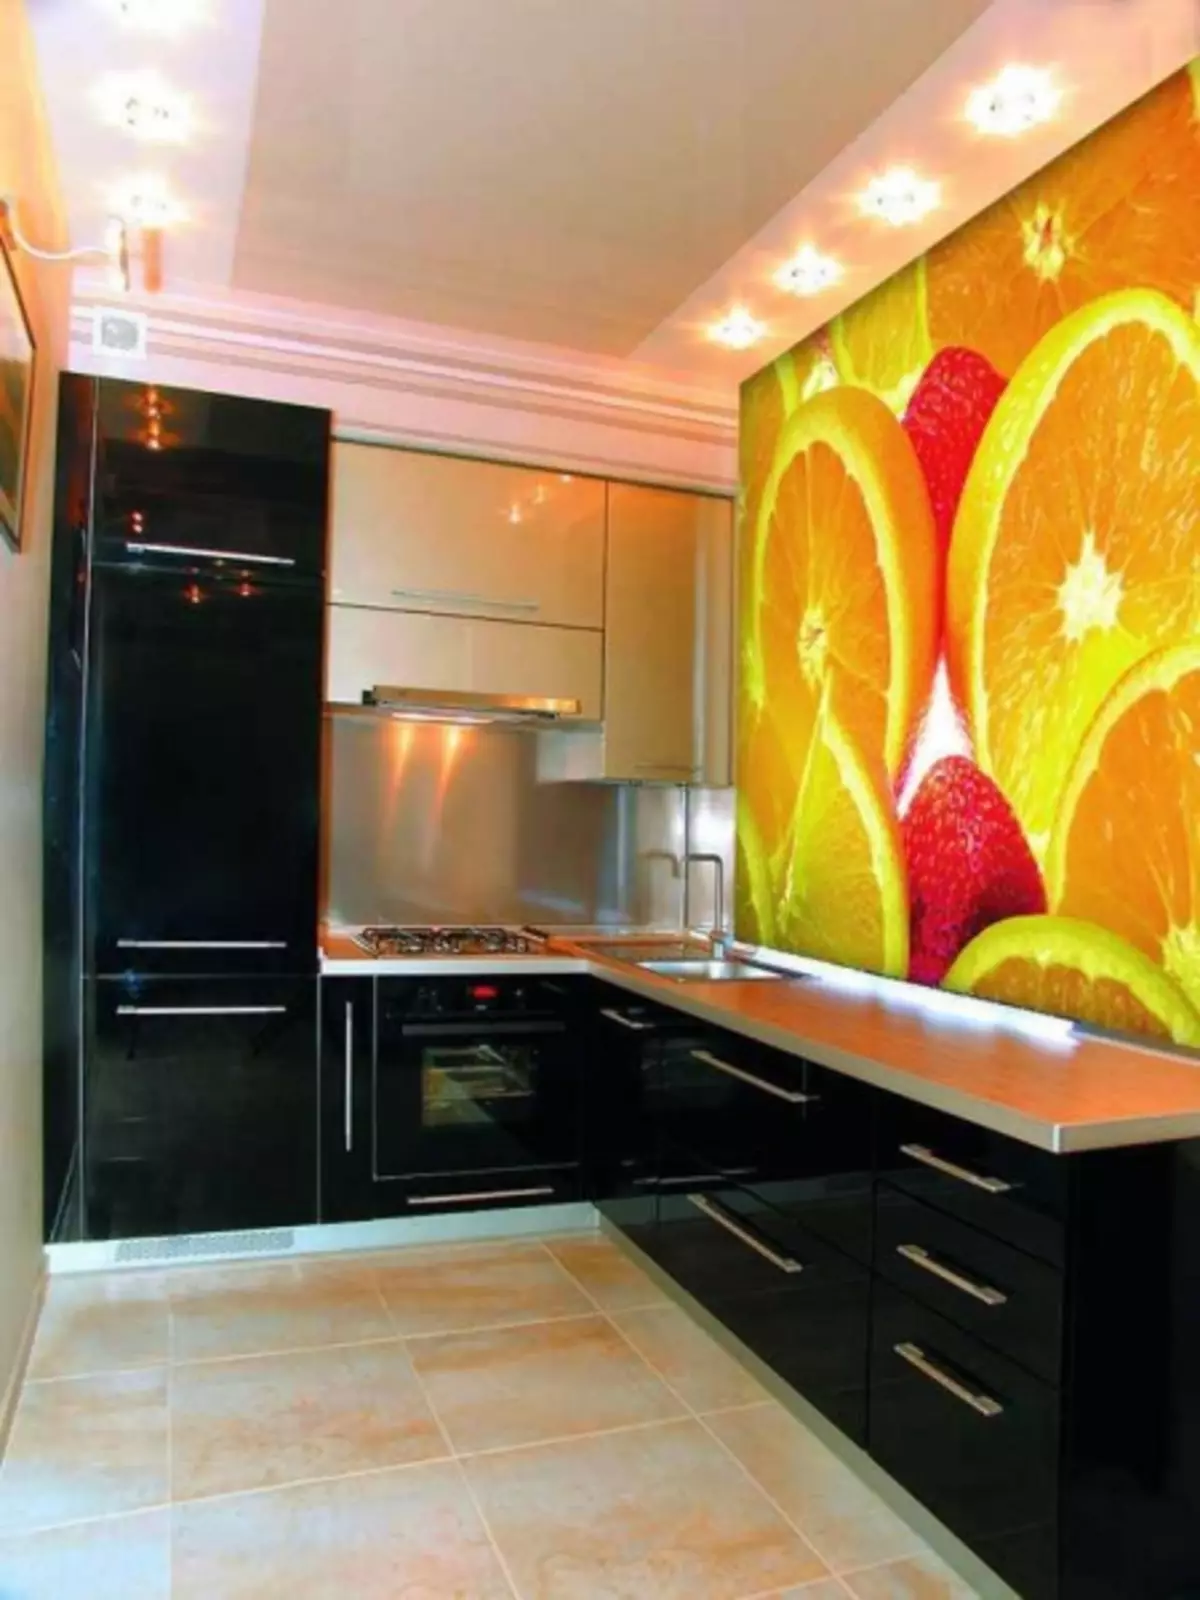 Wallpapers Wallpapers on the Kitchen On Wall: 3D ji bo Kitchen Red, wêne, xemilandin, sêwirandin, xemilandin, vîdyoyê